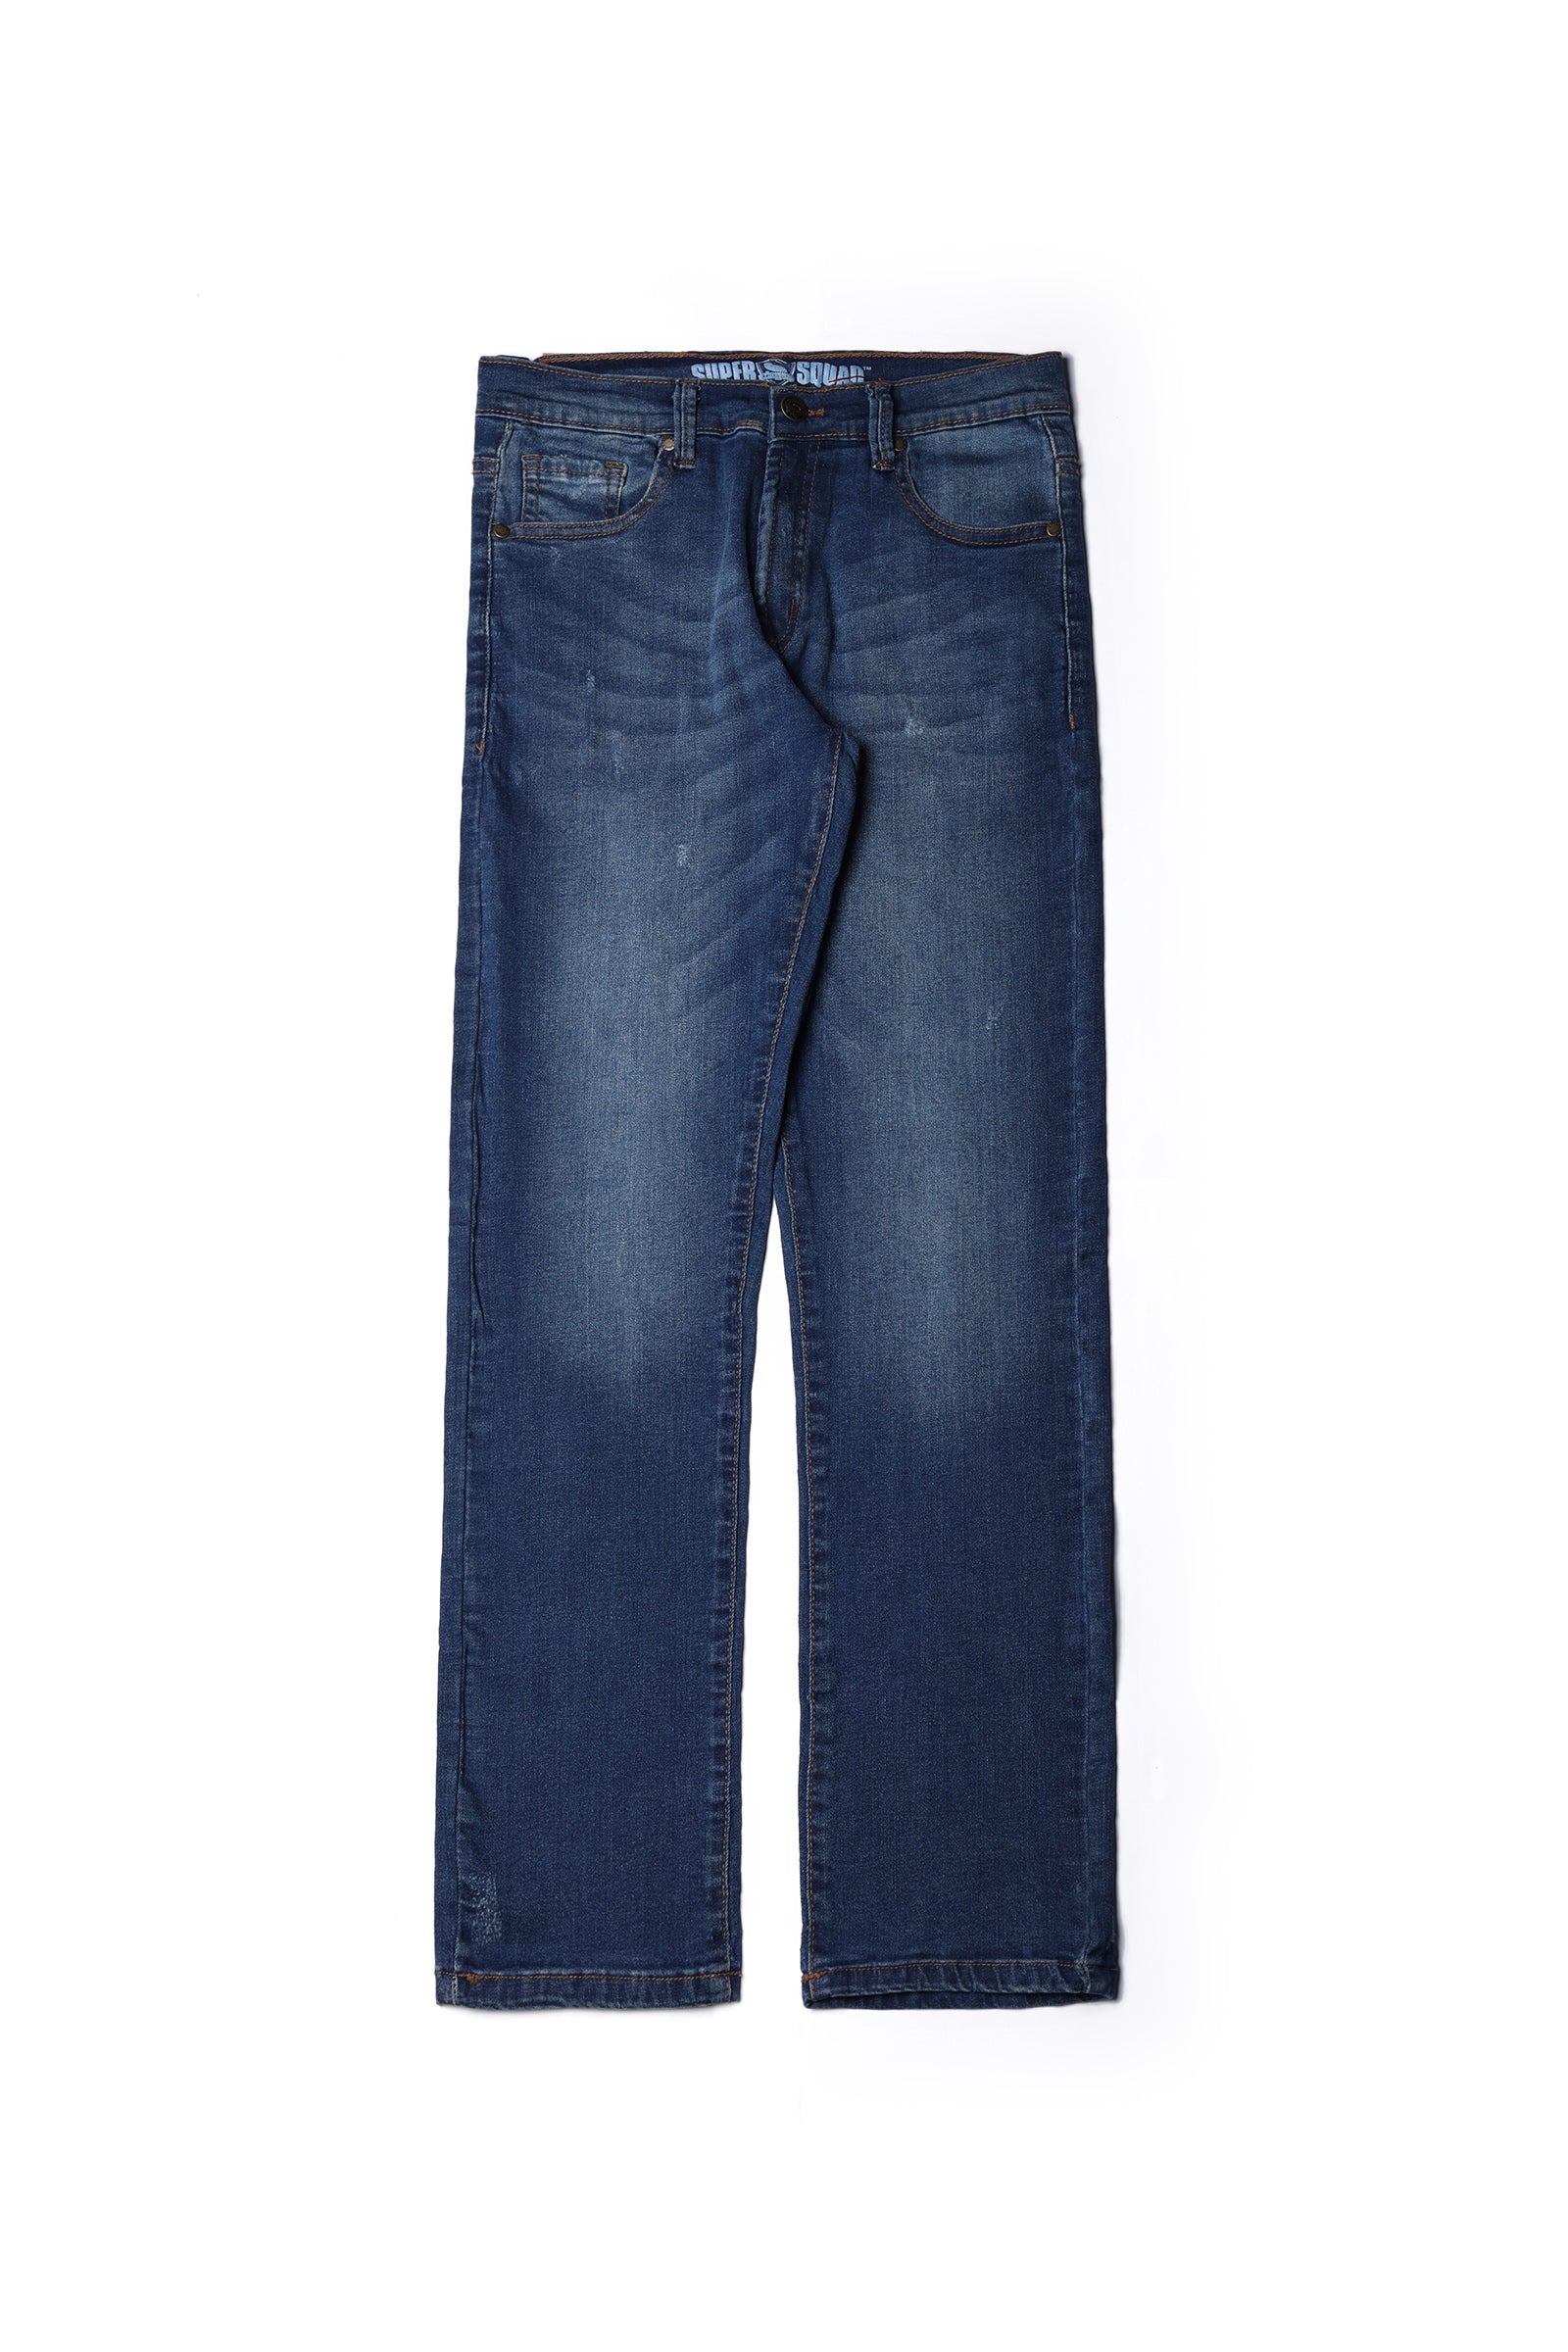 Straight pants (SSBD-209R)